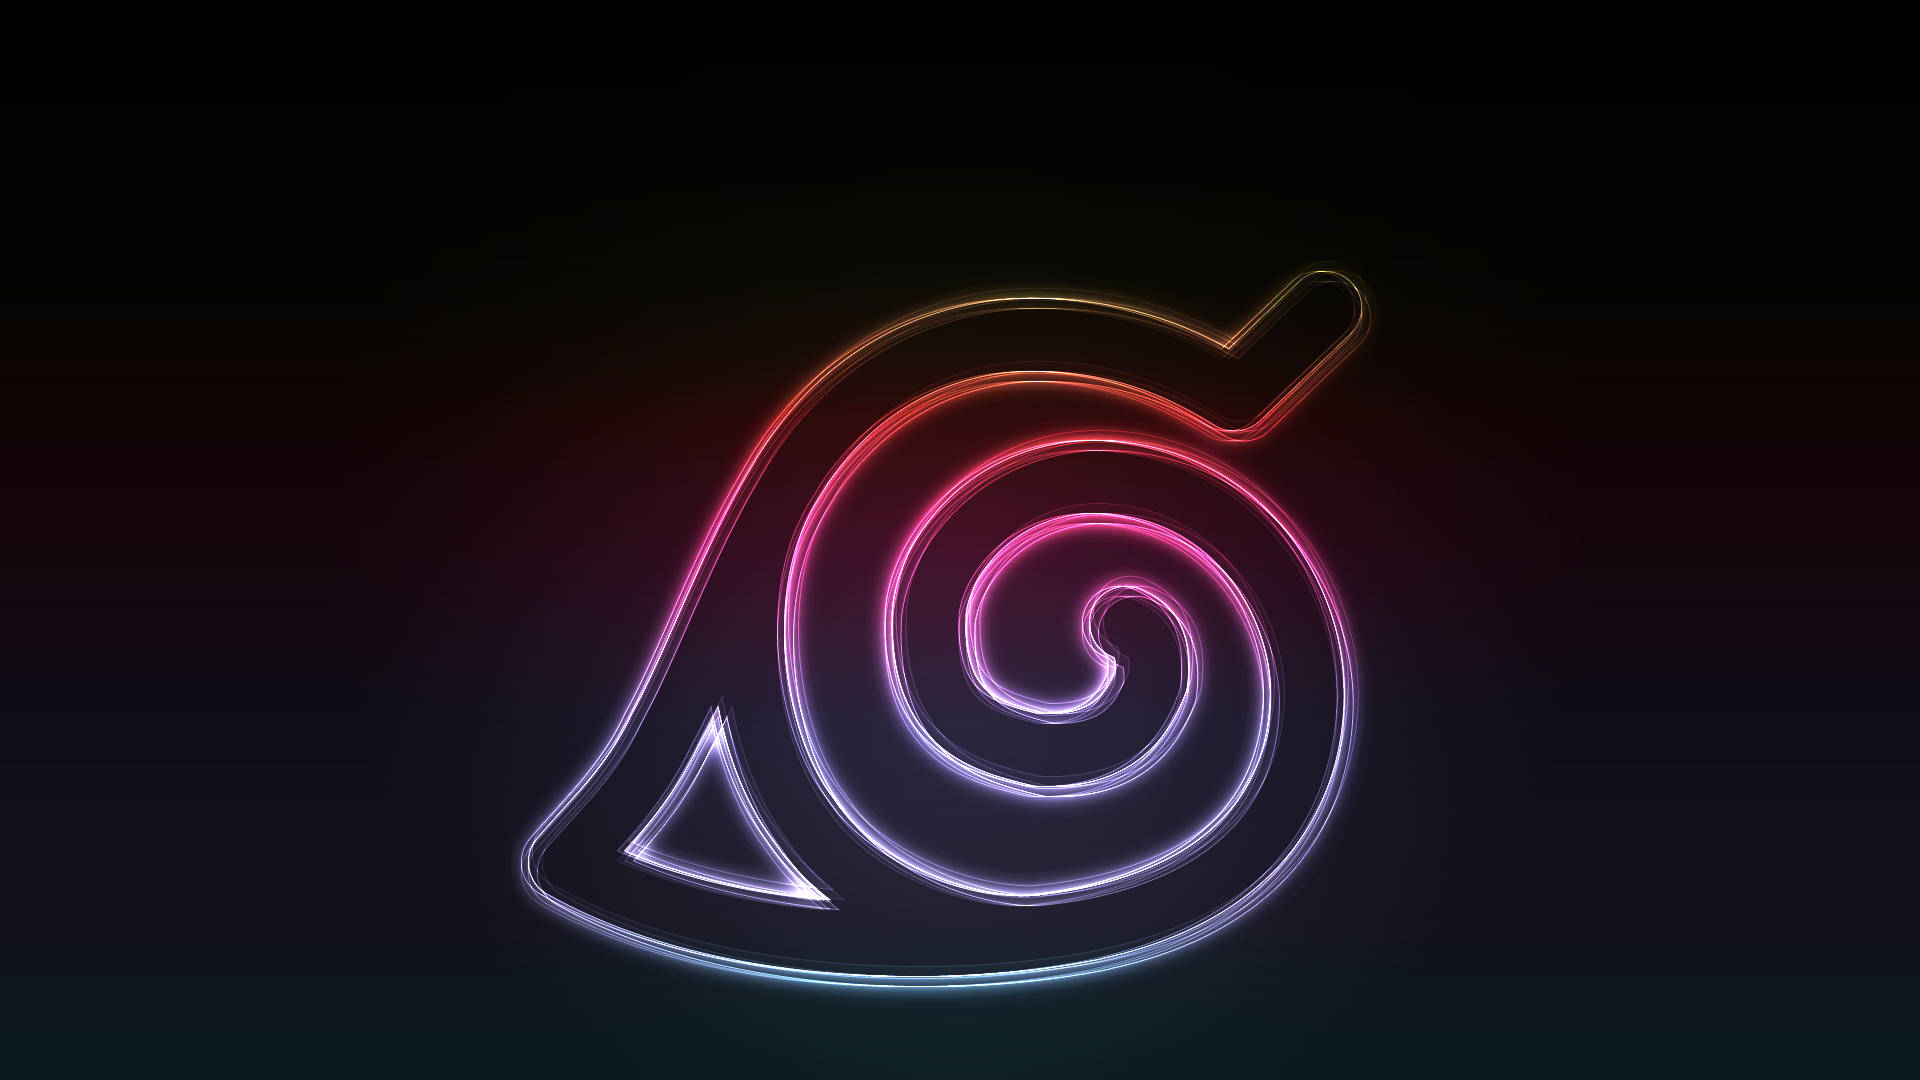 Naruto Symbol In Neon Colors Background